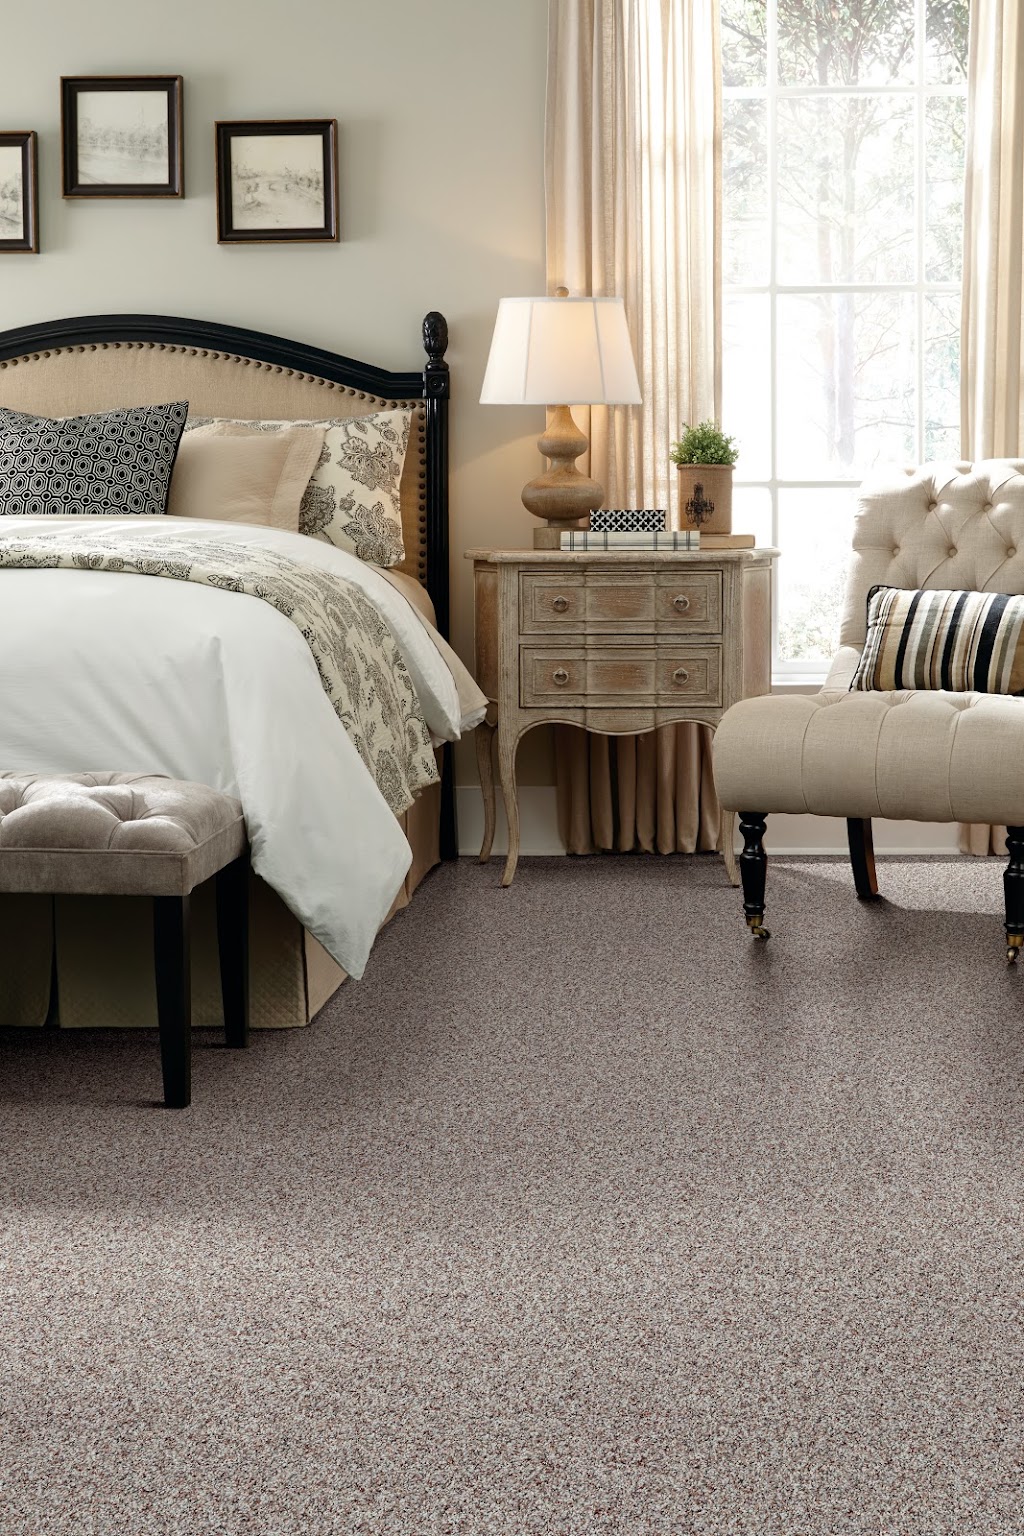 Brandt Carpet & Tile | 101 Maple St, Friend, NE 68359, USA | Phone: (402) 947-6711